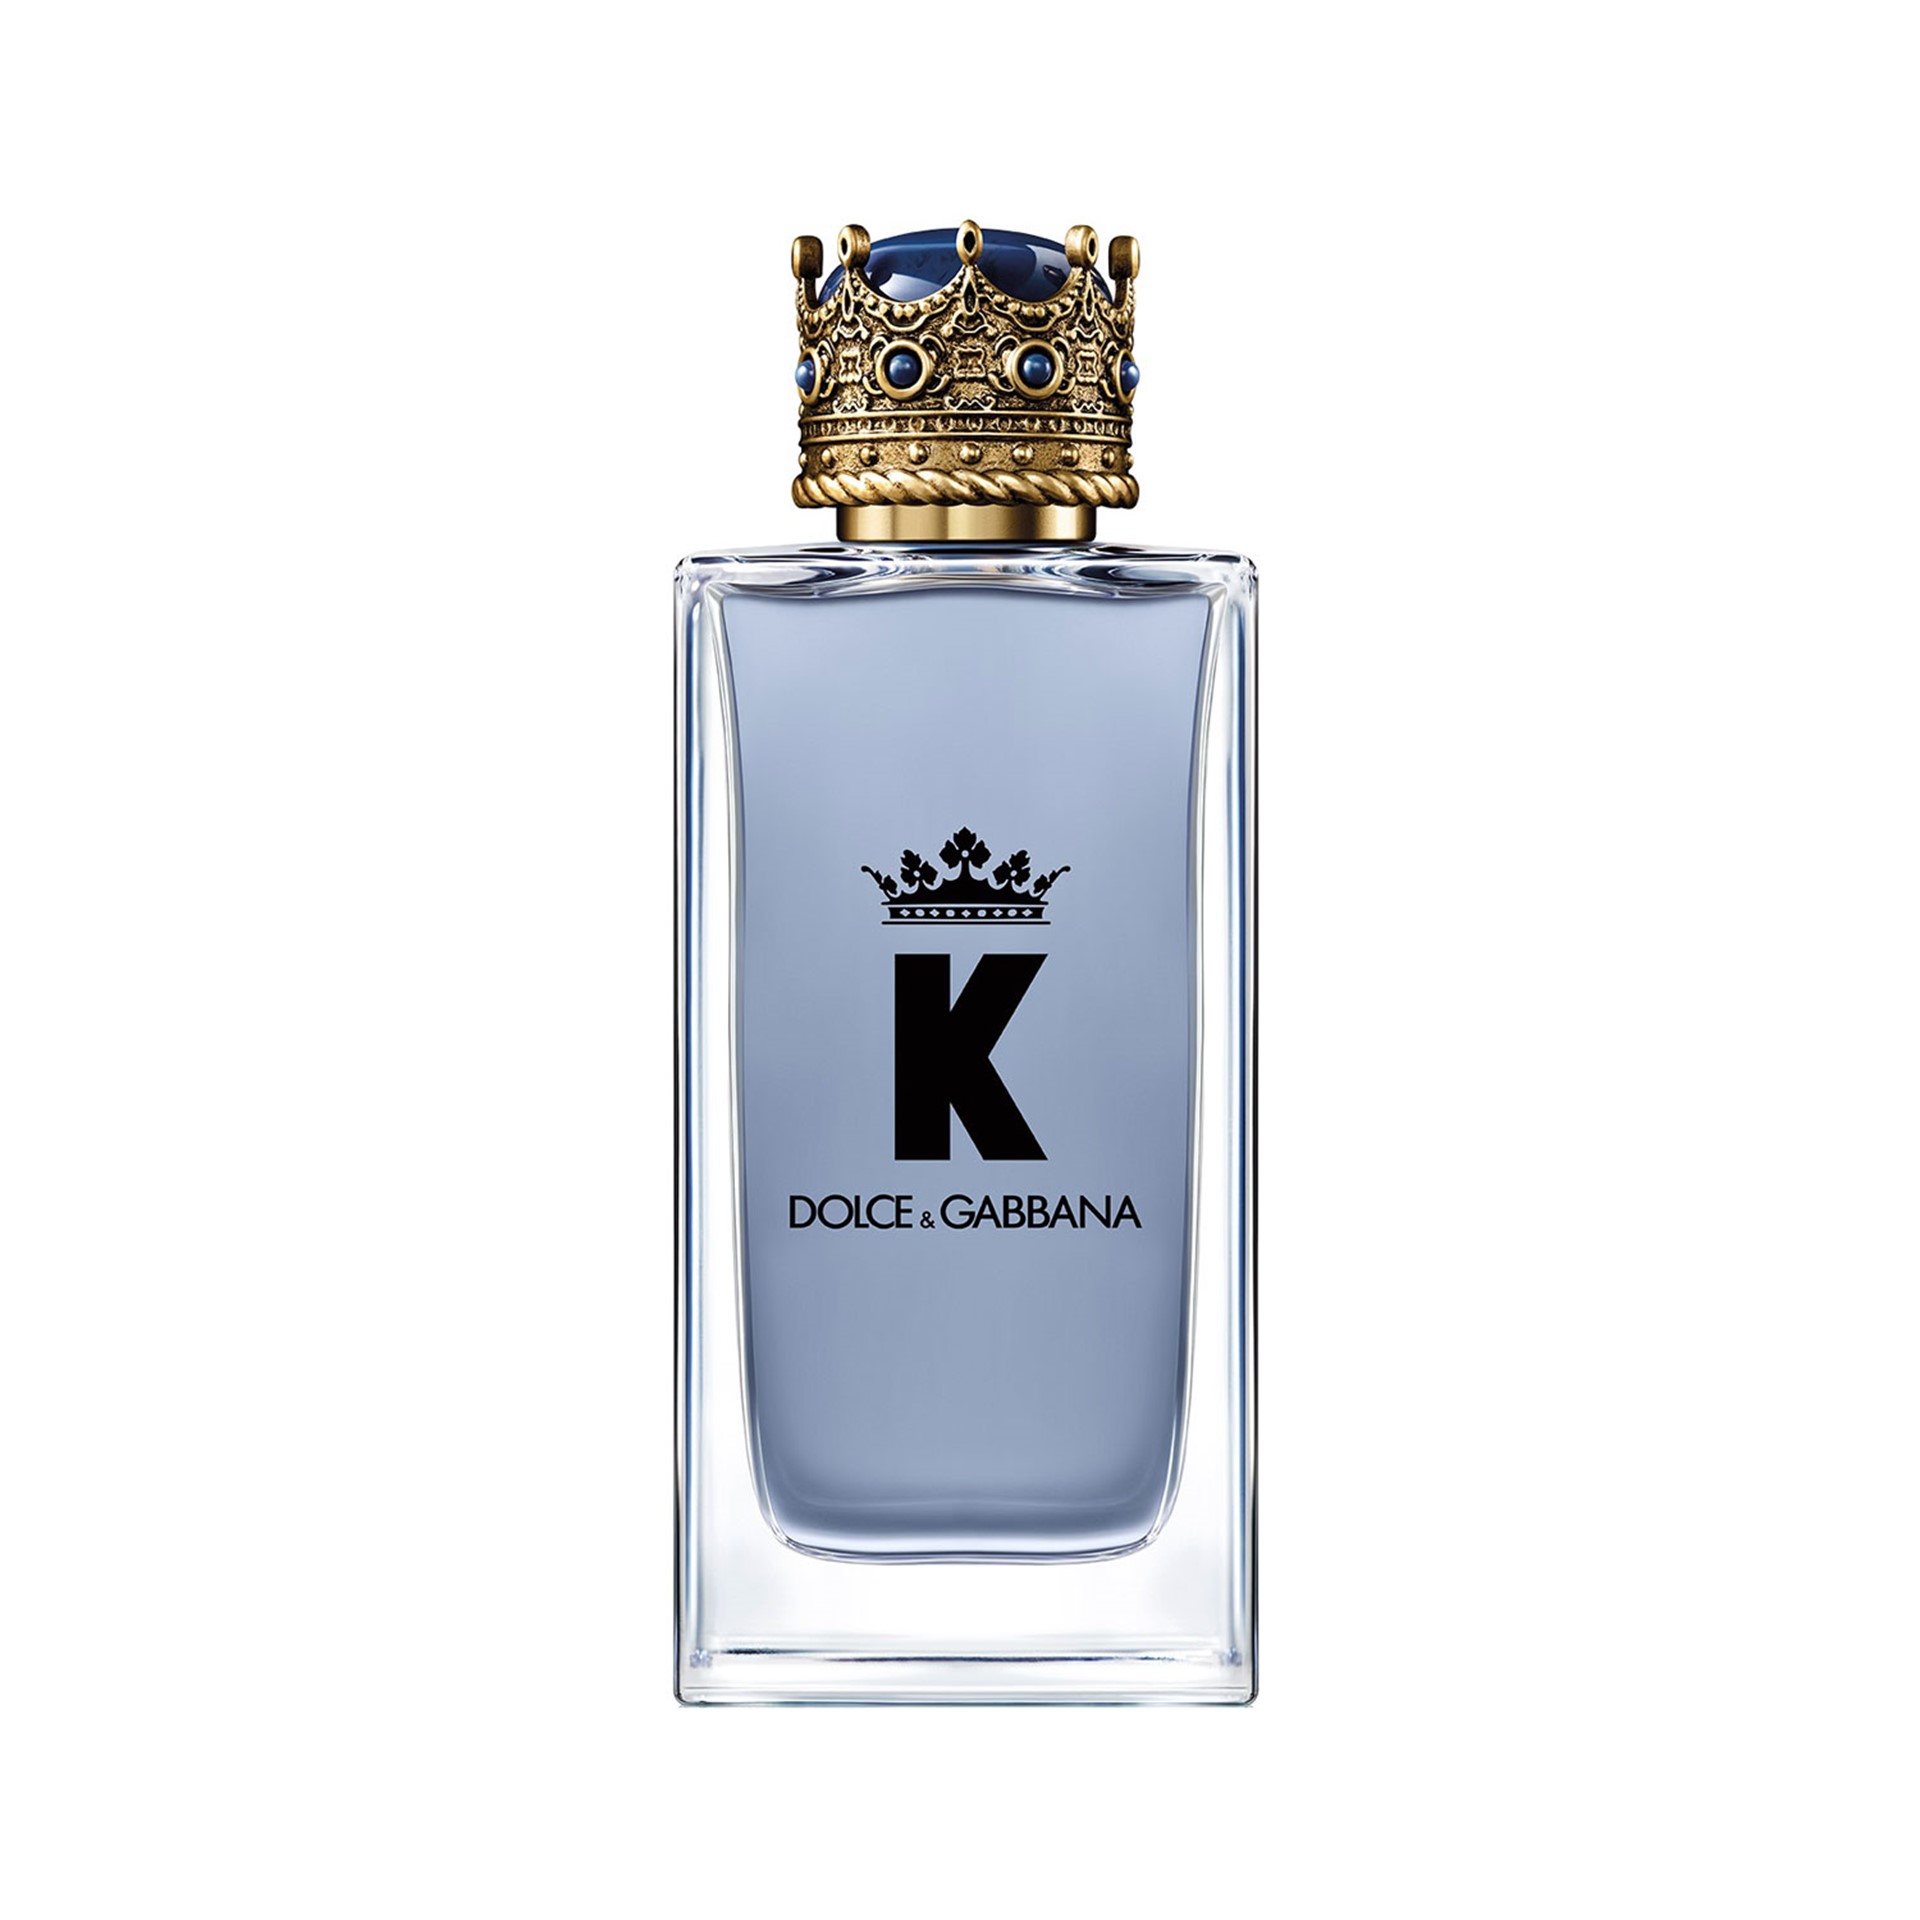 Дольче габбана корона цена. •Dolce&Gabbana k EDT 100ml. Dolce and Gabbana King 50 ml. Dolce&Gabbana k (m) 100ml EDT. Dolce Gabbana King 100ml.